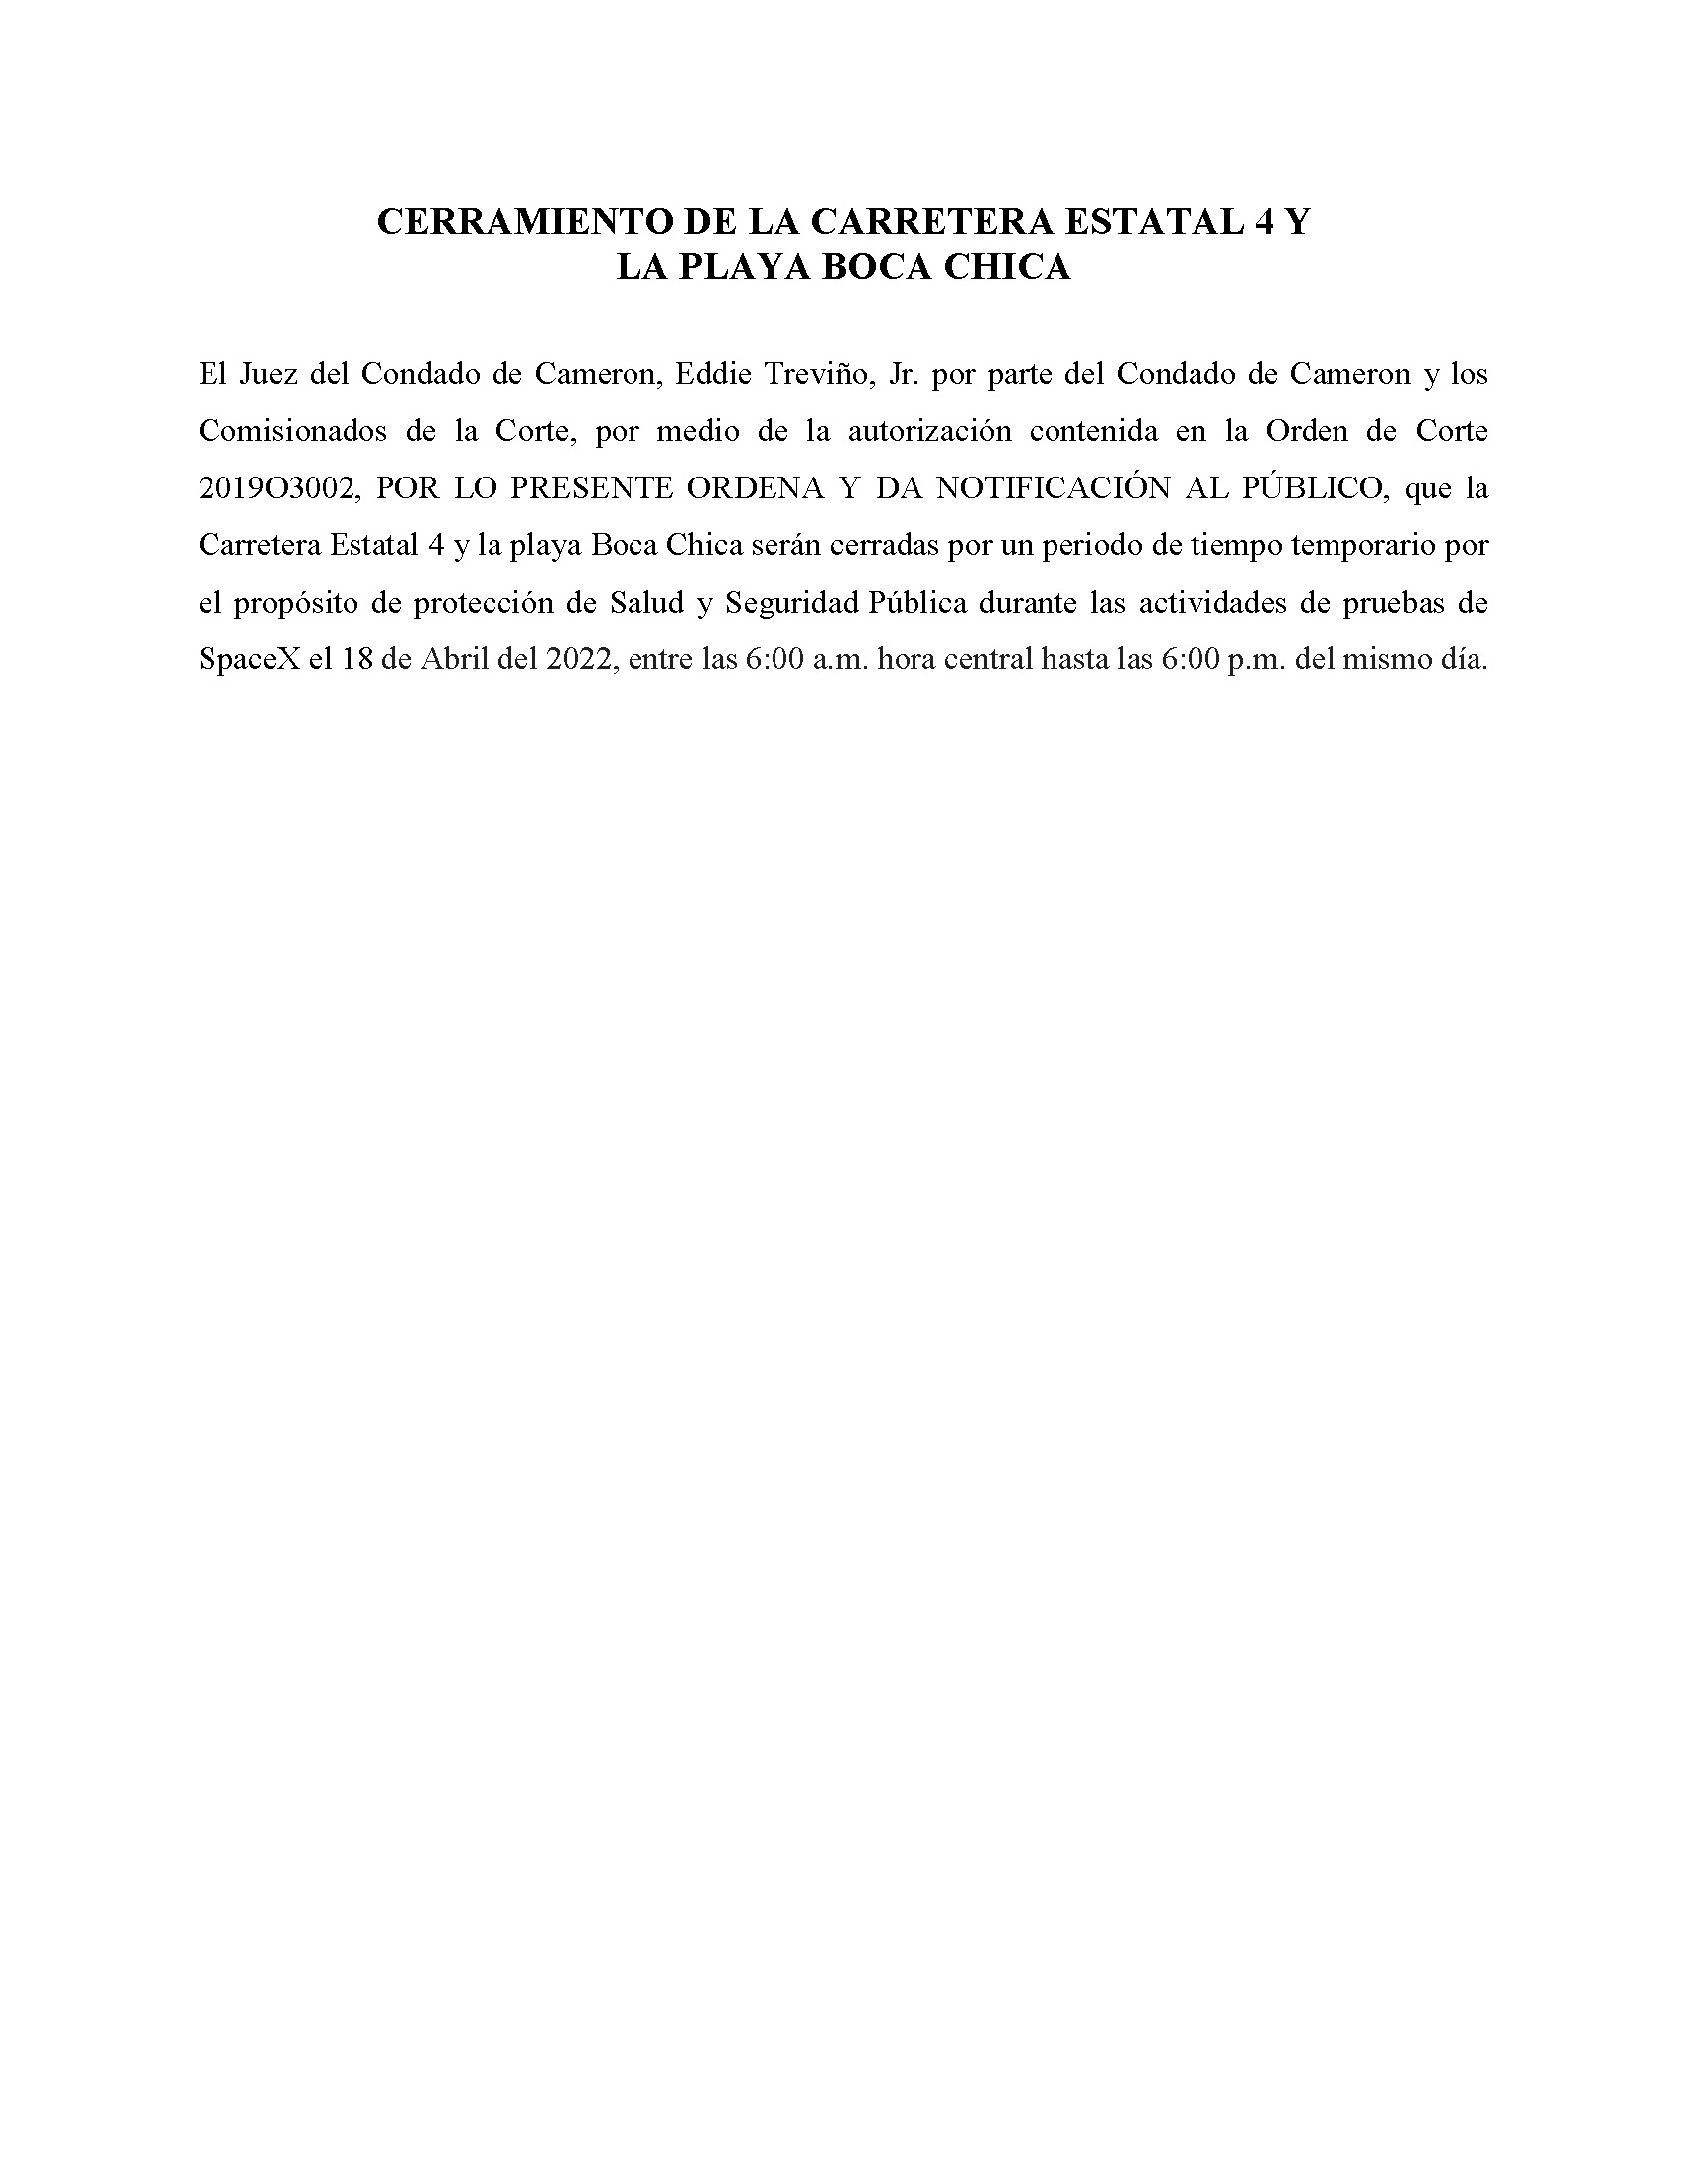 ORDER.CLOSURE OF HIGHWAY 4 Y LA PLAYA BOCA CHICA.SPANISH.04.18.2022